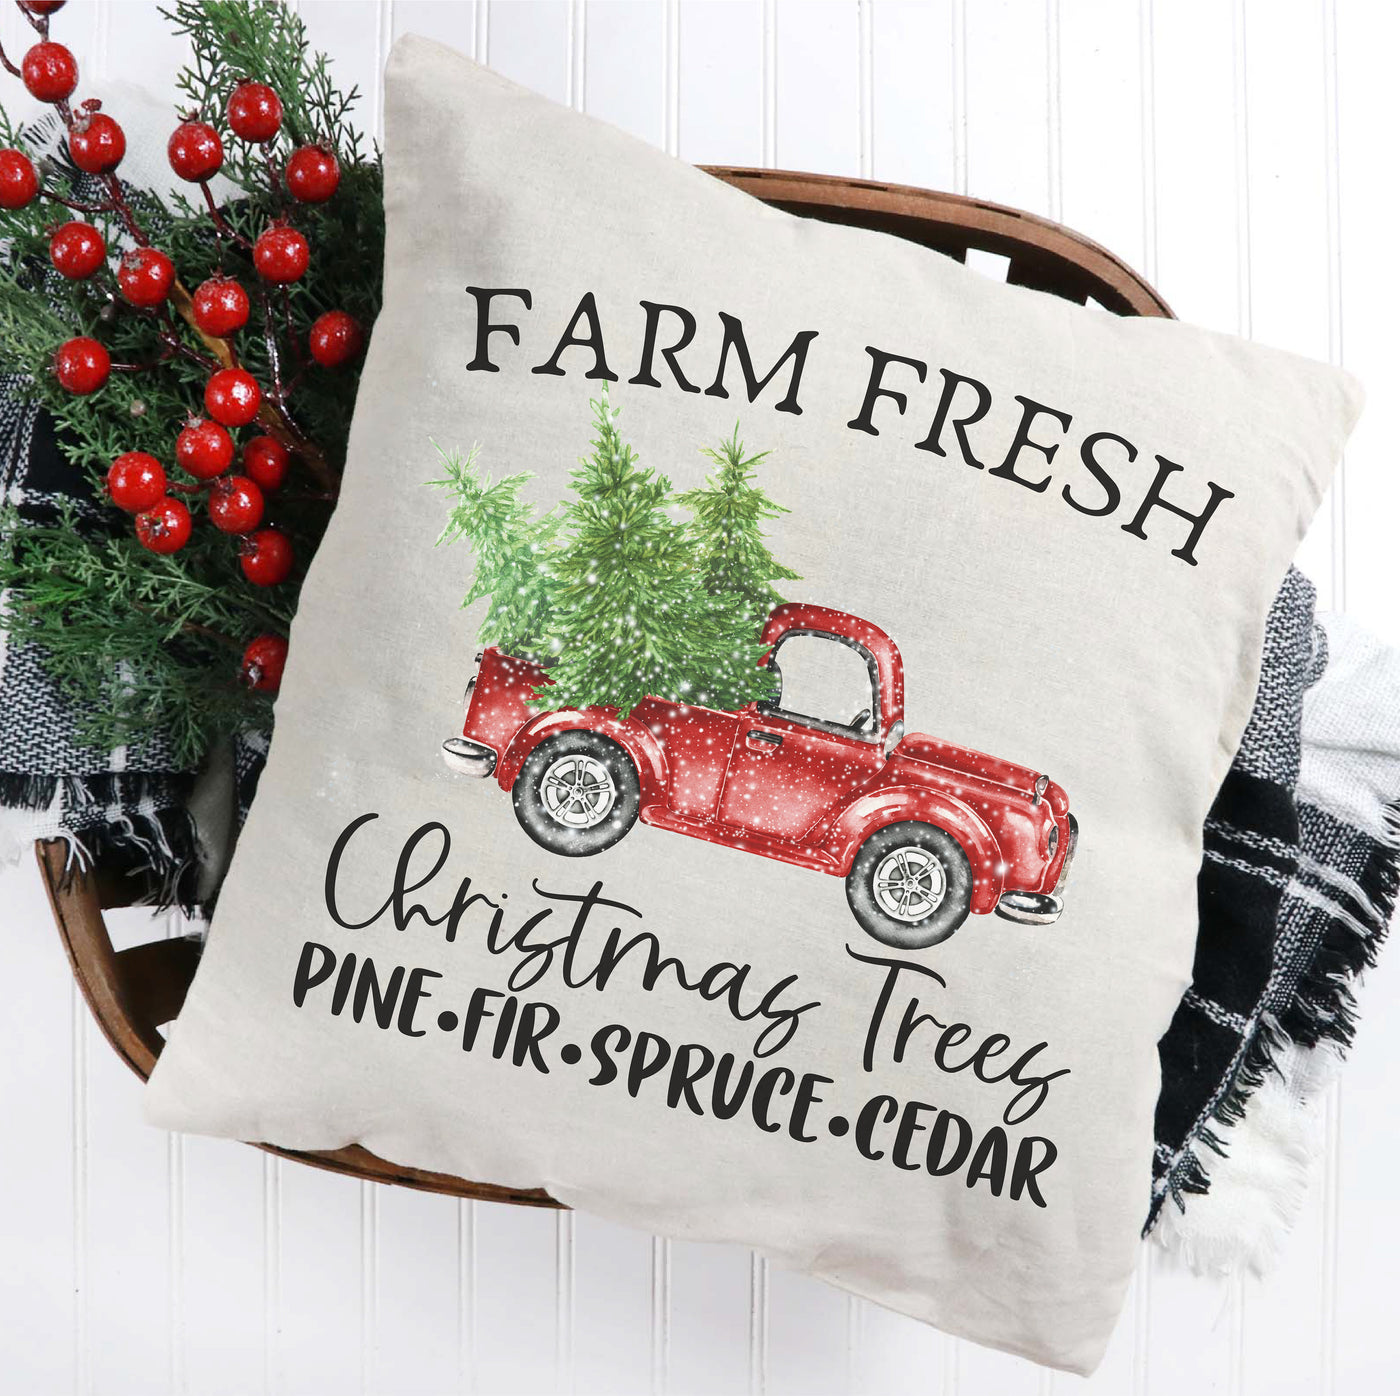 Farm Fresh Christmas Trees Truck 16x16 Throw Pillow